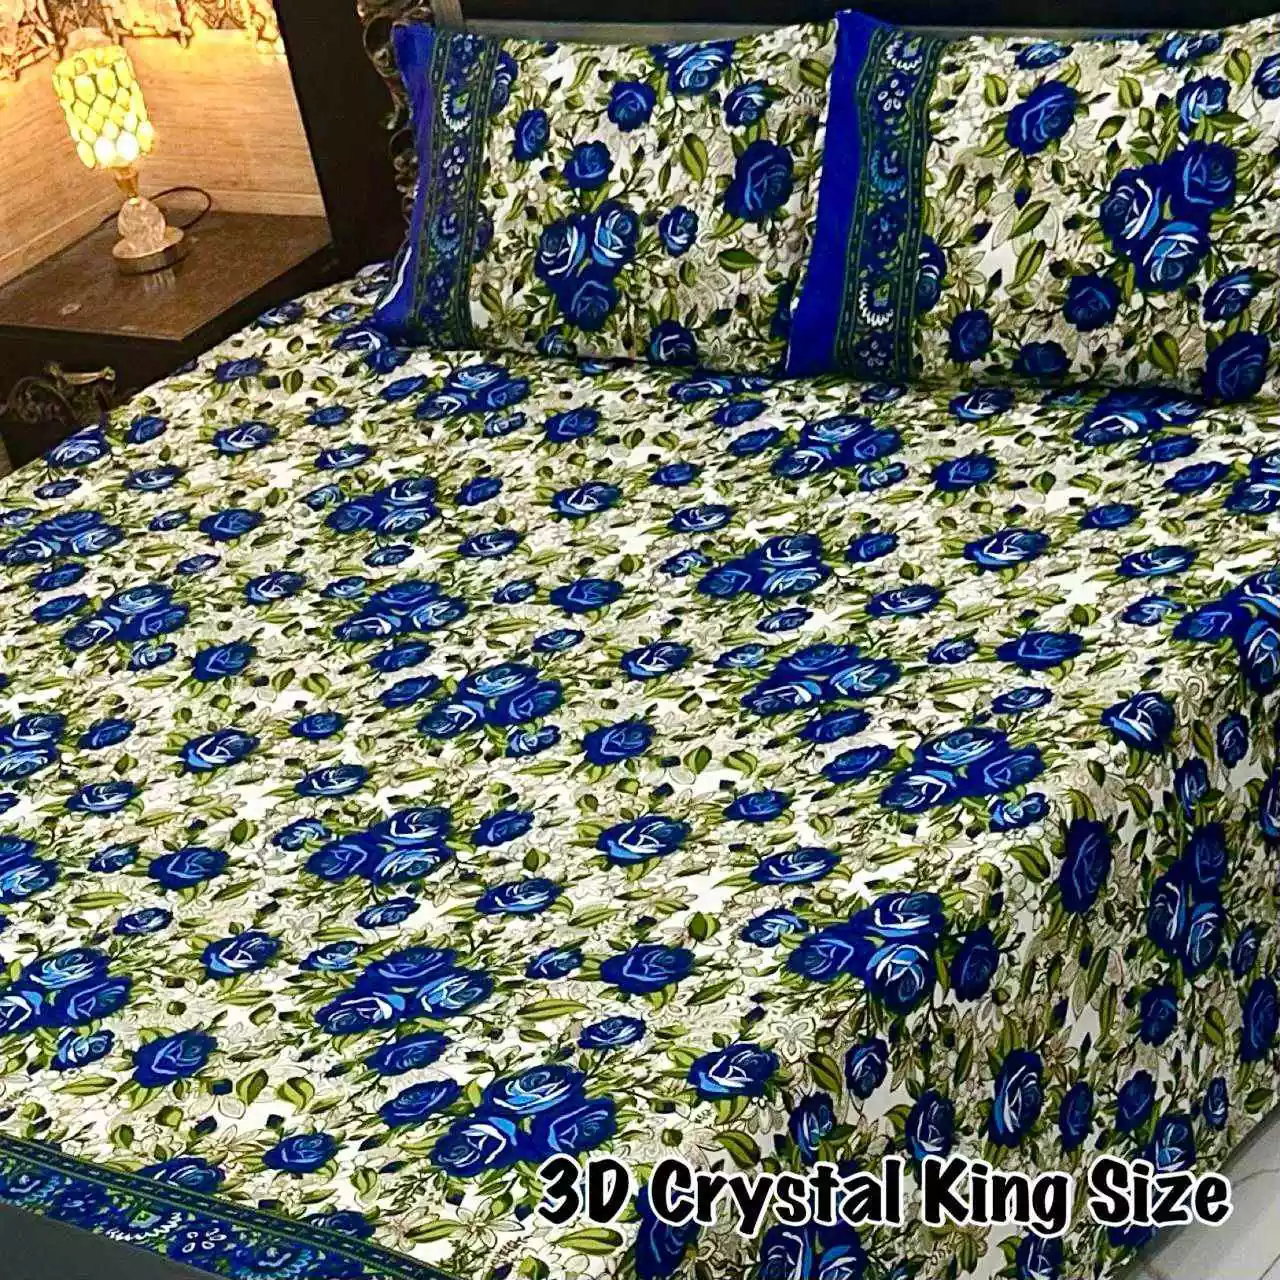 DF-CBSKS-5: DFY Bedding 3D Crystal Bed Sheet King Size